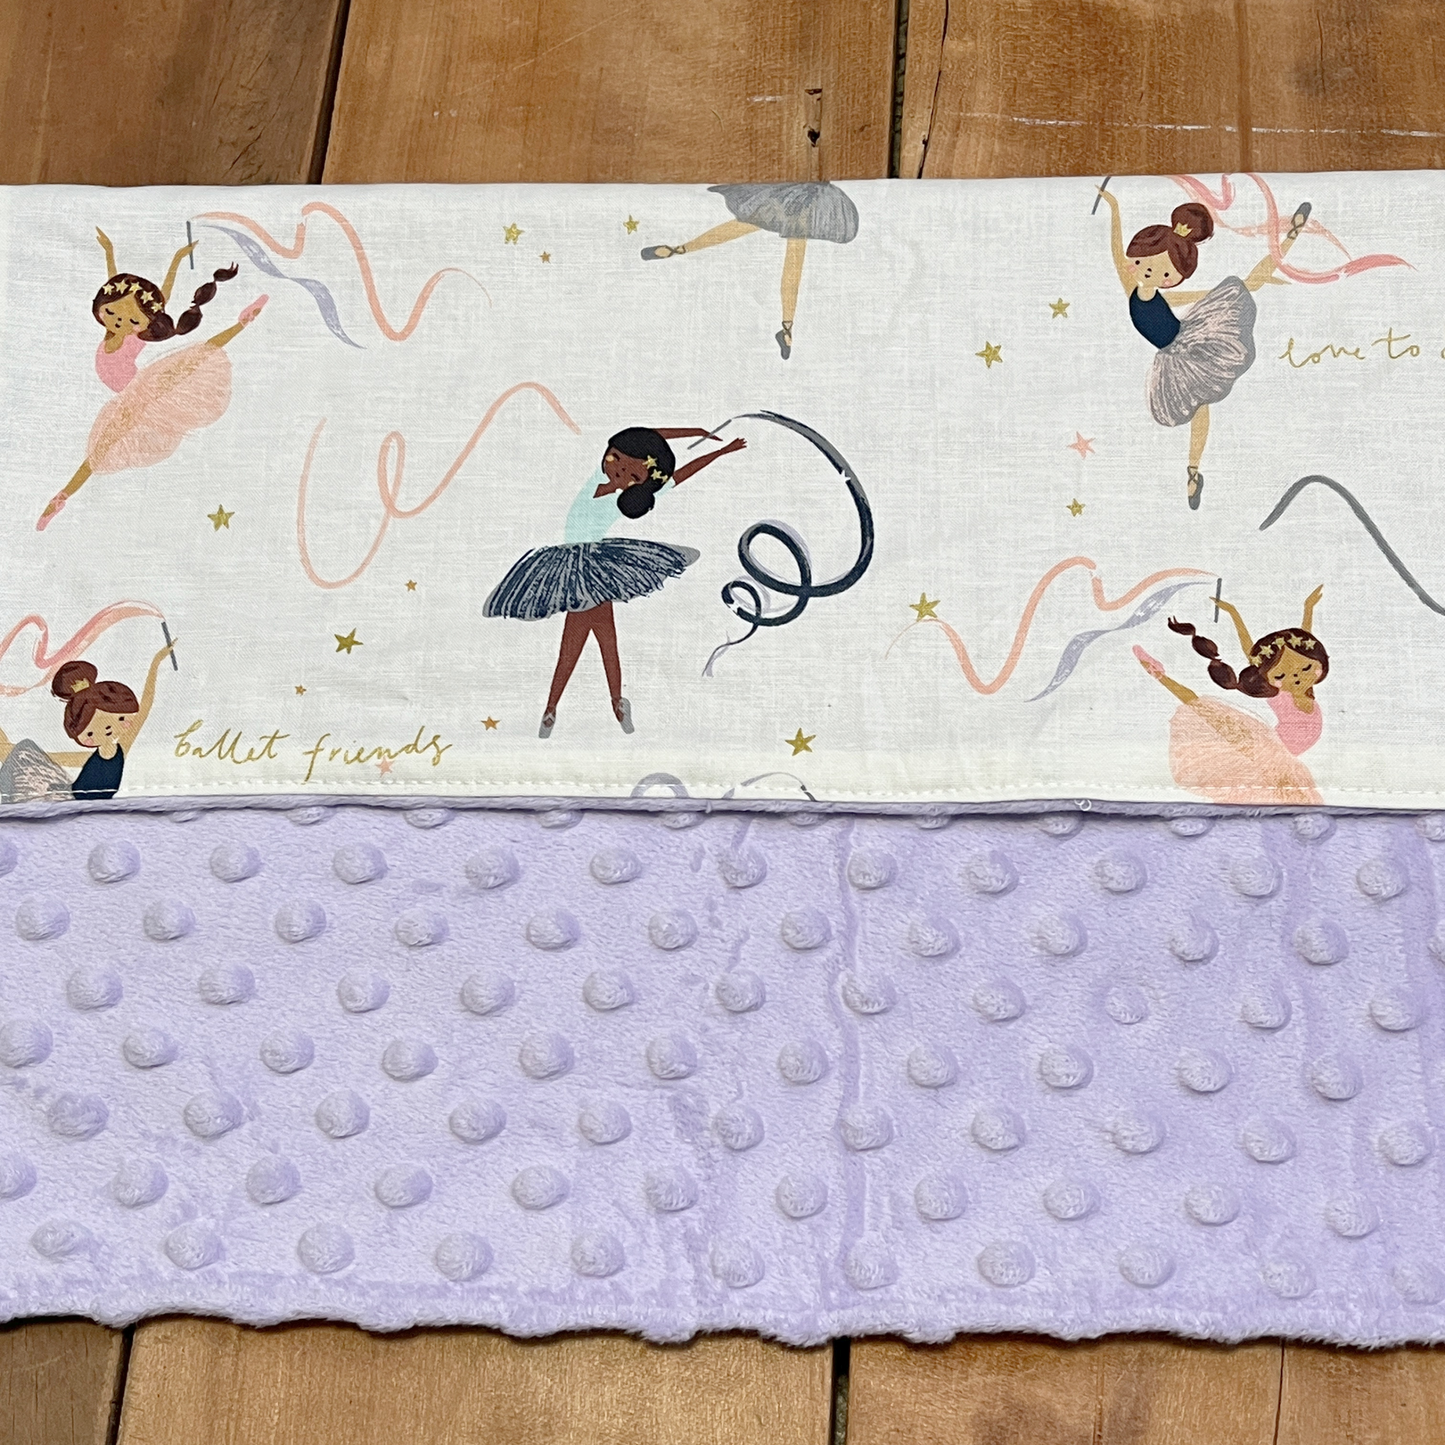 Twirling Ballerina blanket sizes vary, shown in lovey size